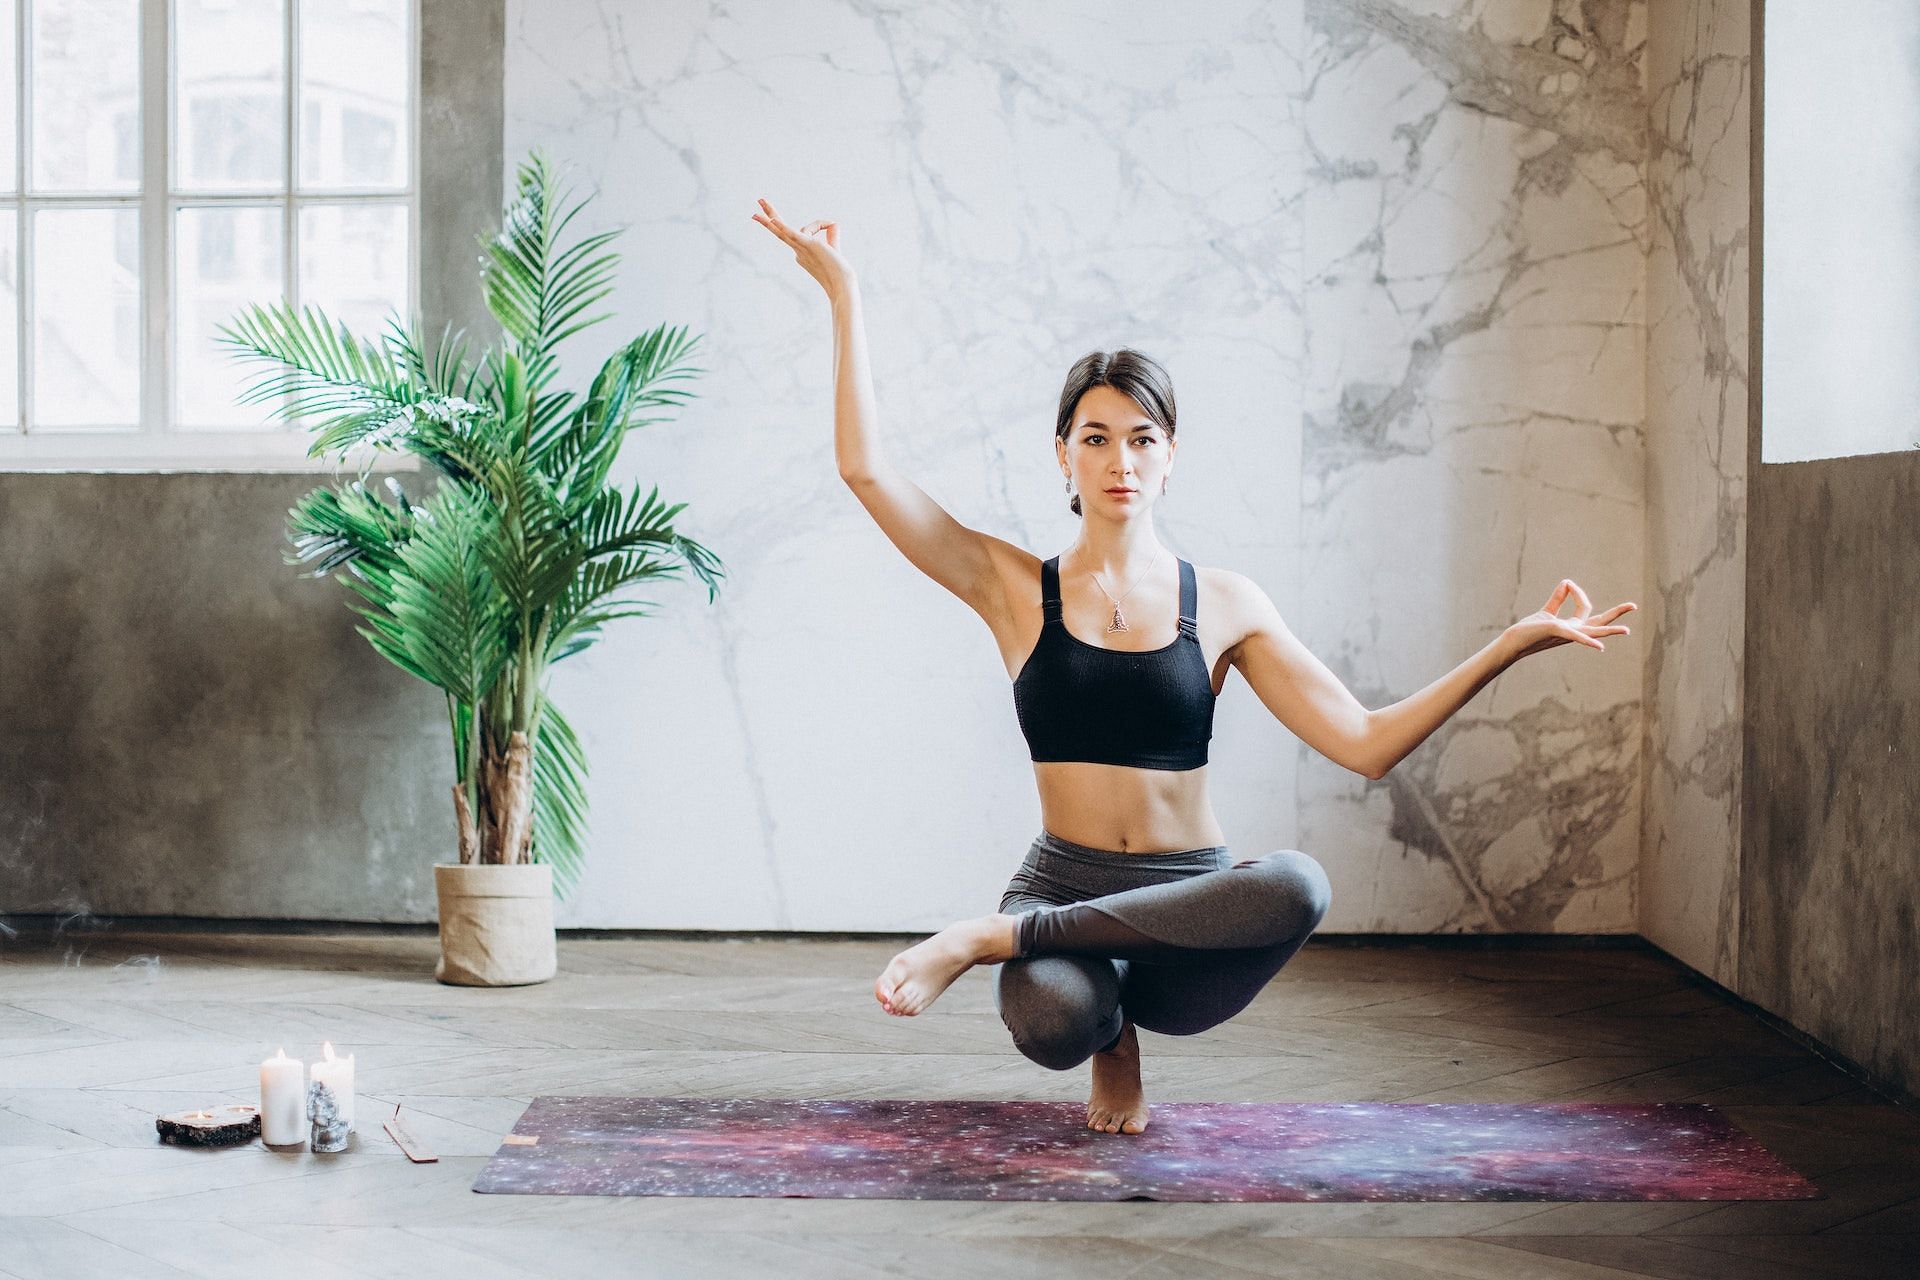 Yoga exercises improve balance and strength. (Photo via Pexels/Elina Fairytale)